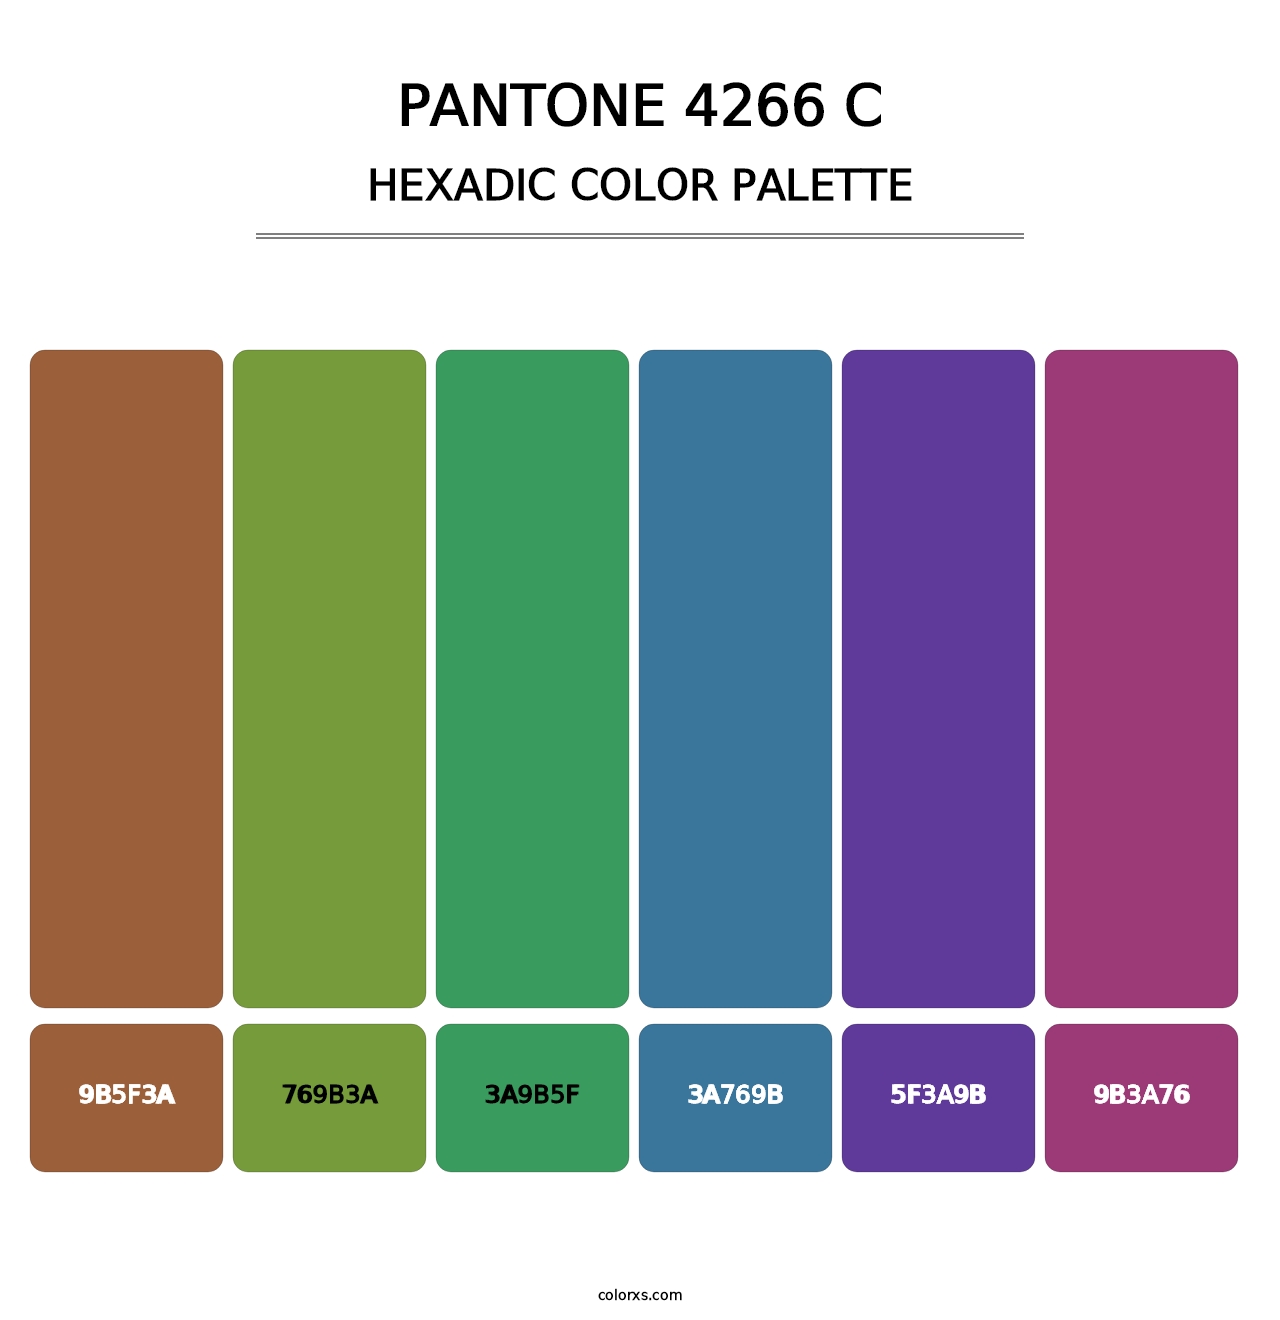 PANTONE 4266 C - Hexadic Color Palette